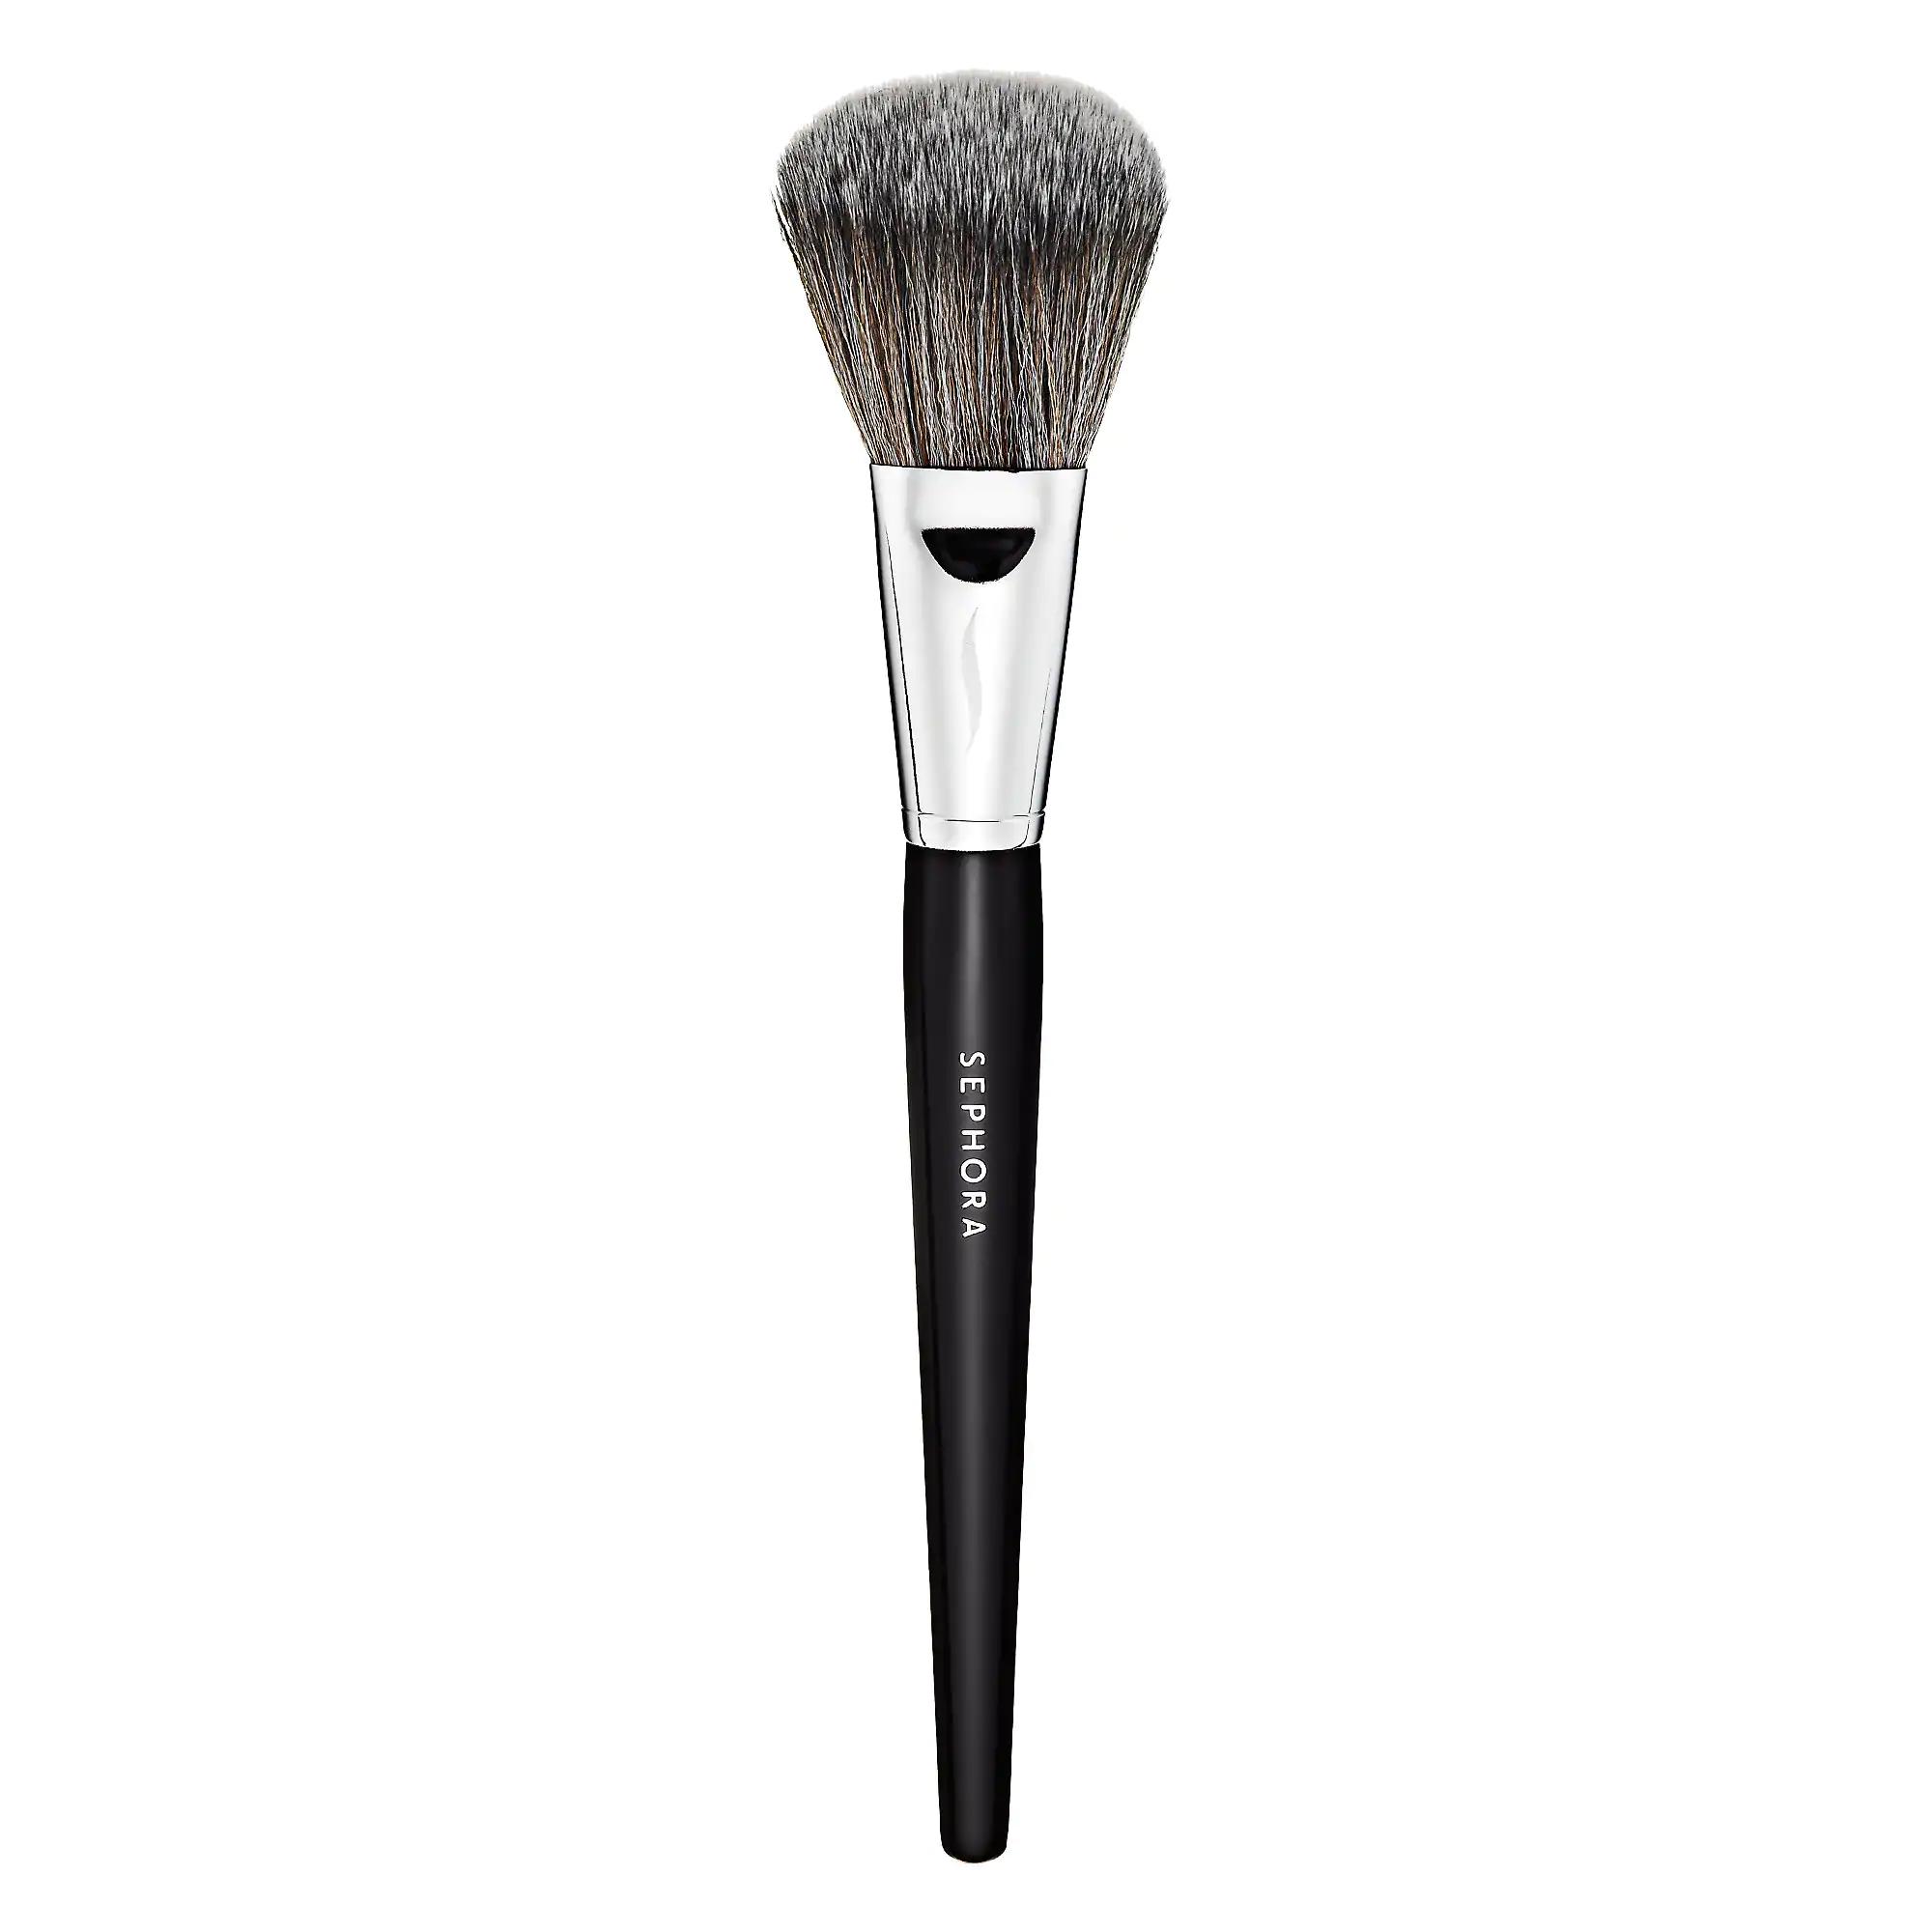 Sephora PRO Flawless Light Powder Brush 50